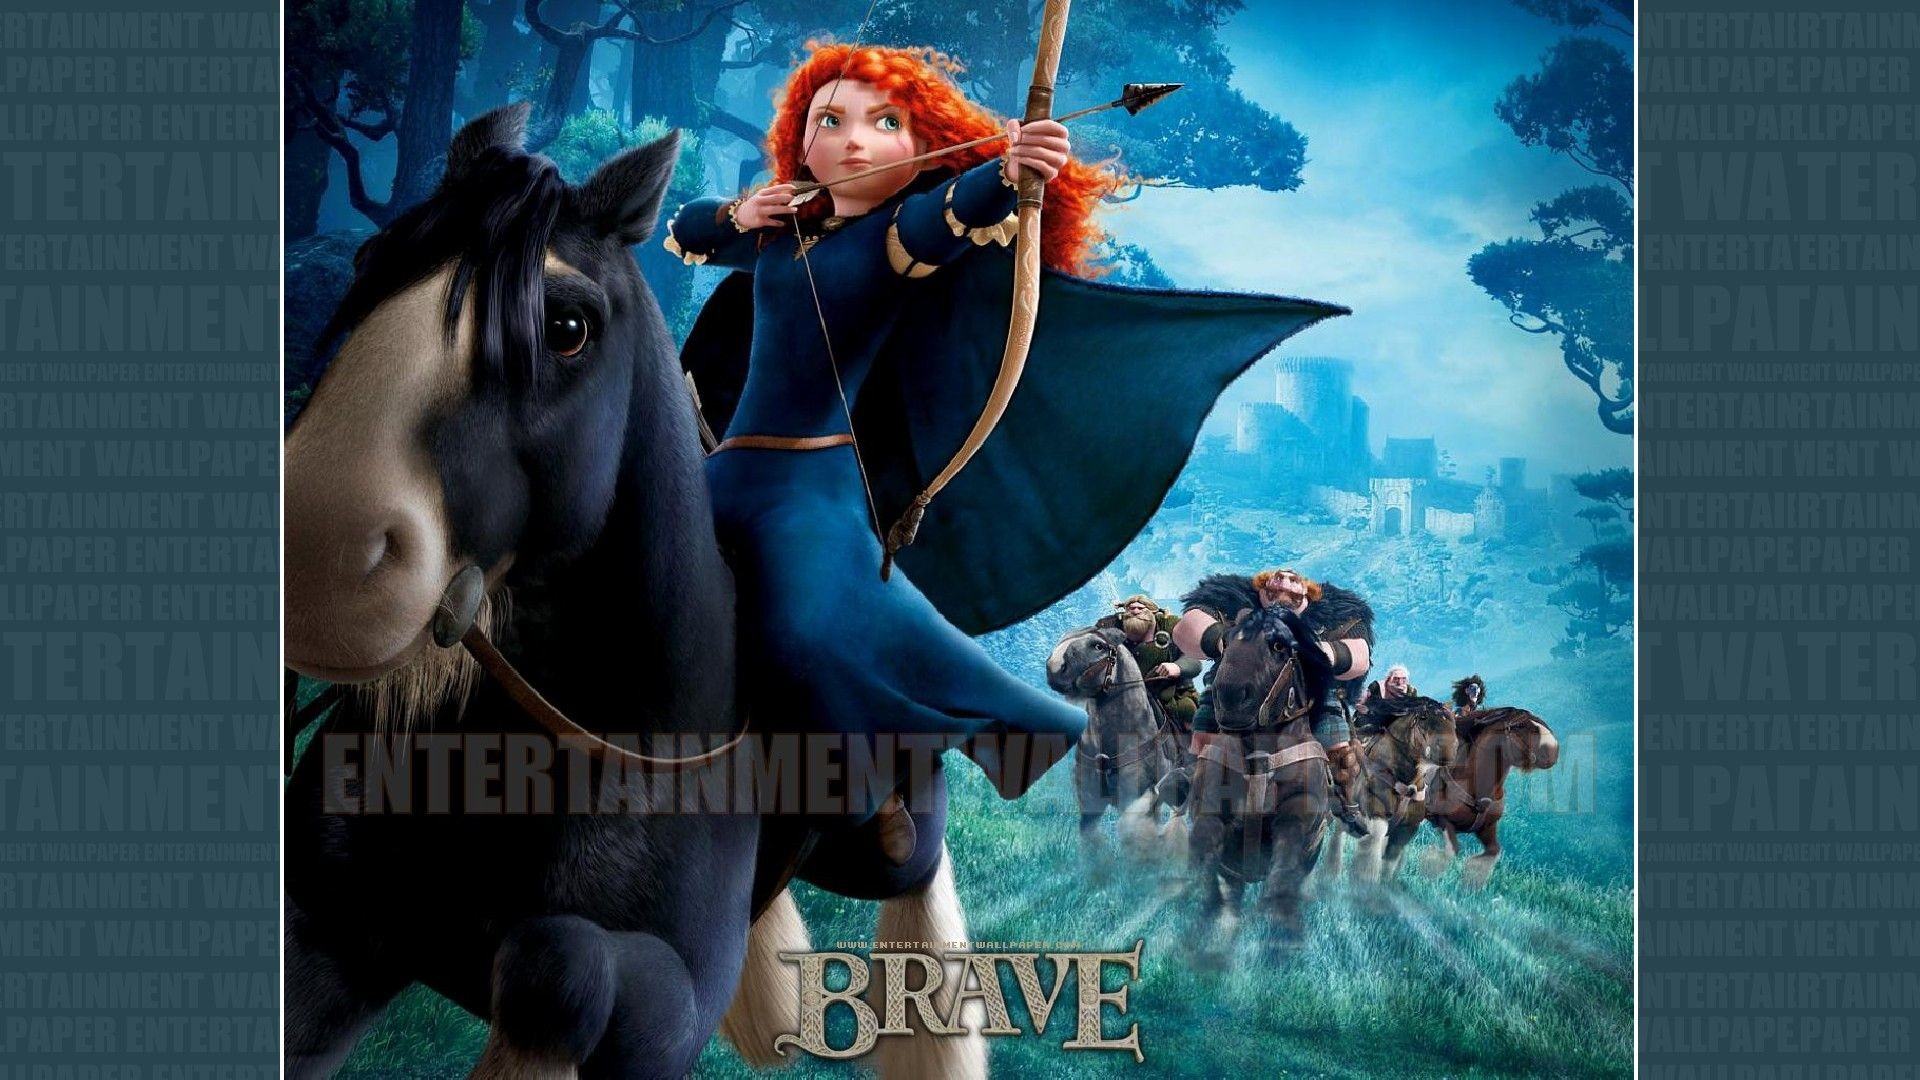 1920x1080 Brave Wallpaper - Original size, download now. Princess Merida, Brave Disney,  Disney